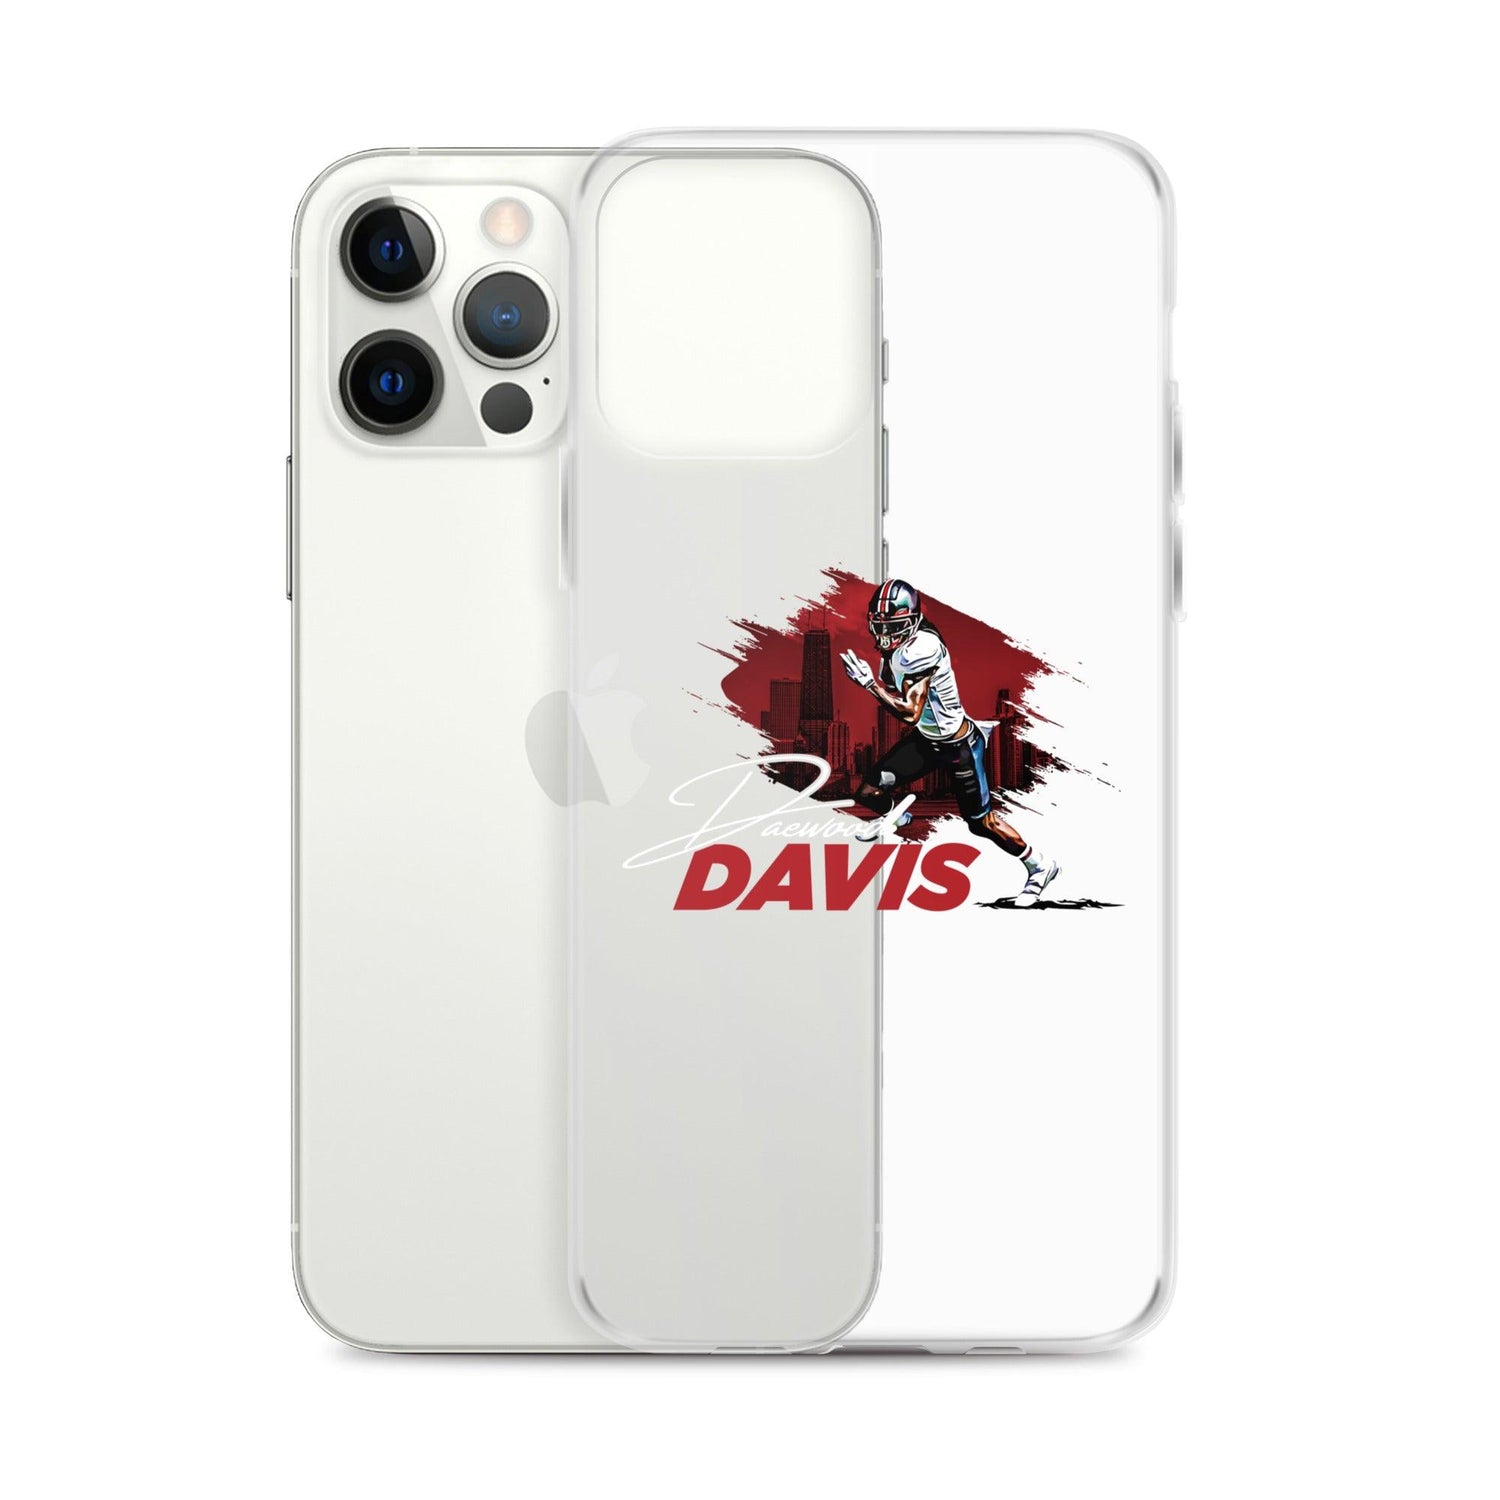 Daewood Davis "Flash" iPhone Case - Fan Arch